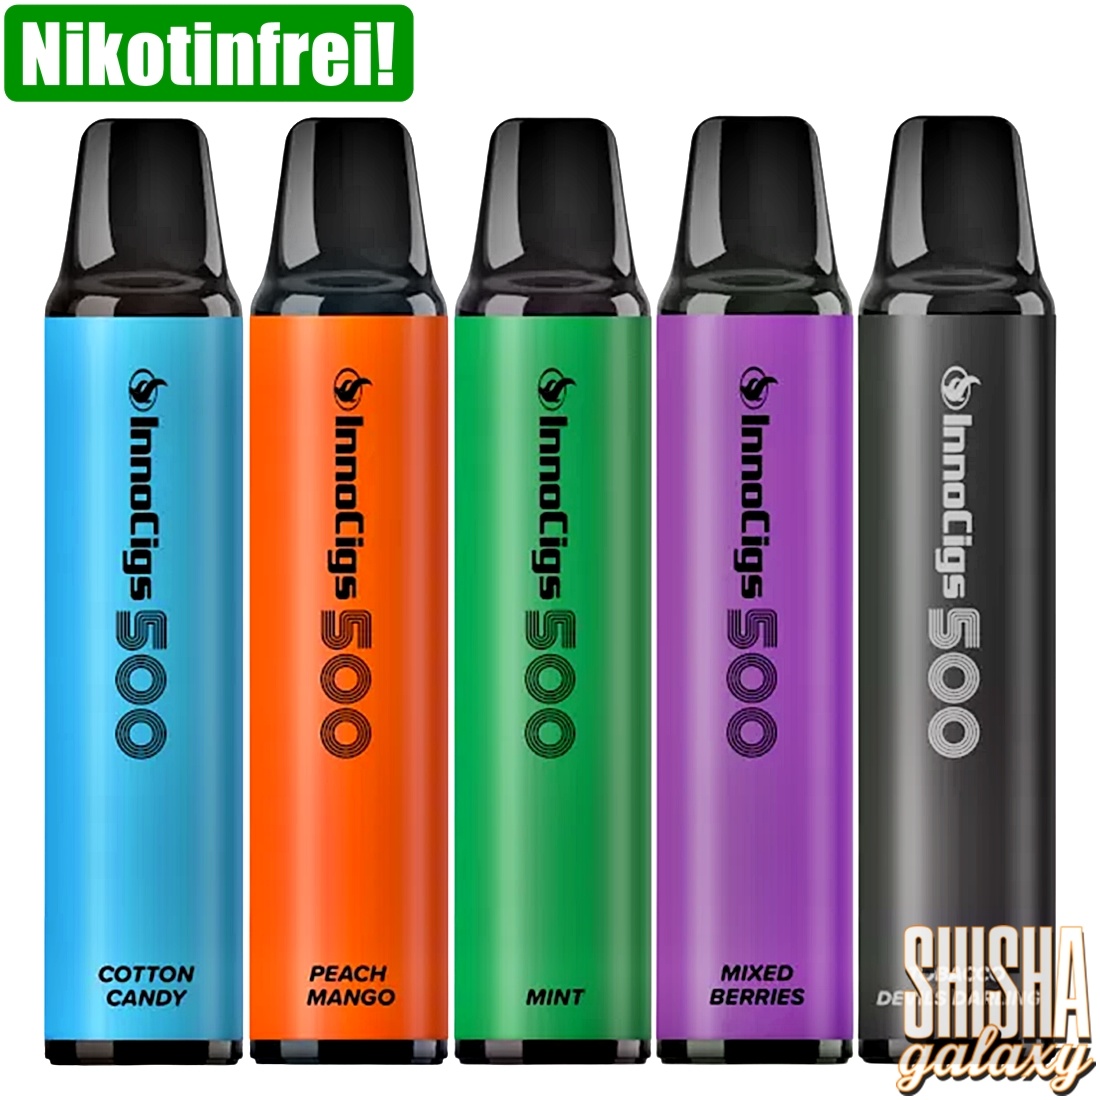 InnoCigs 500 - Probierset / Bundle ohne Nikotin - E-Zigarette 